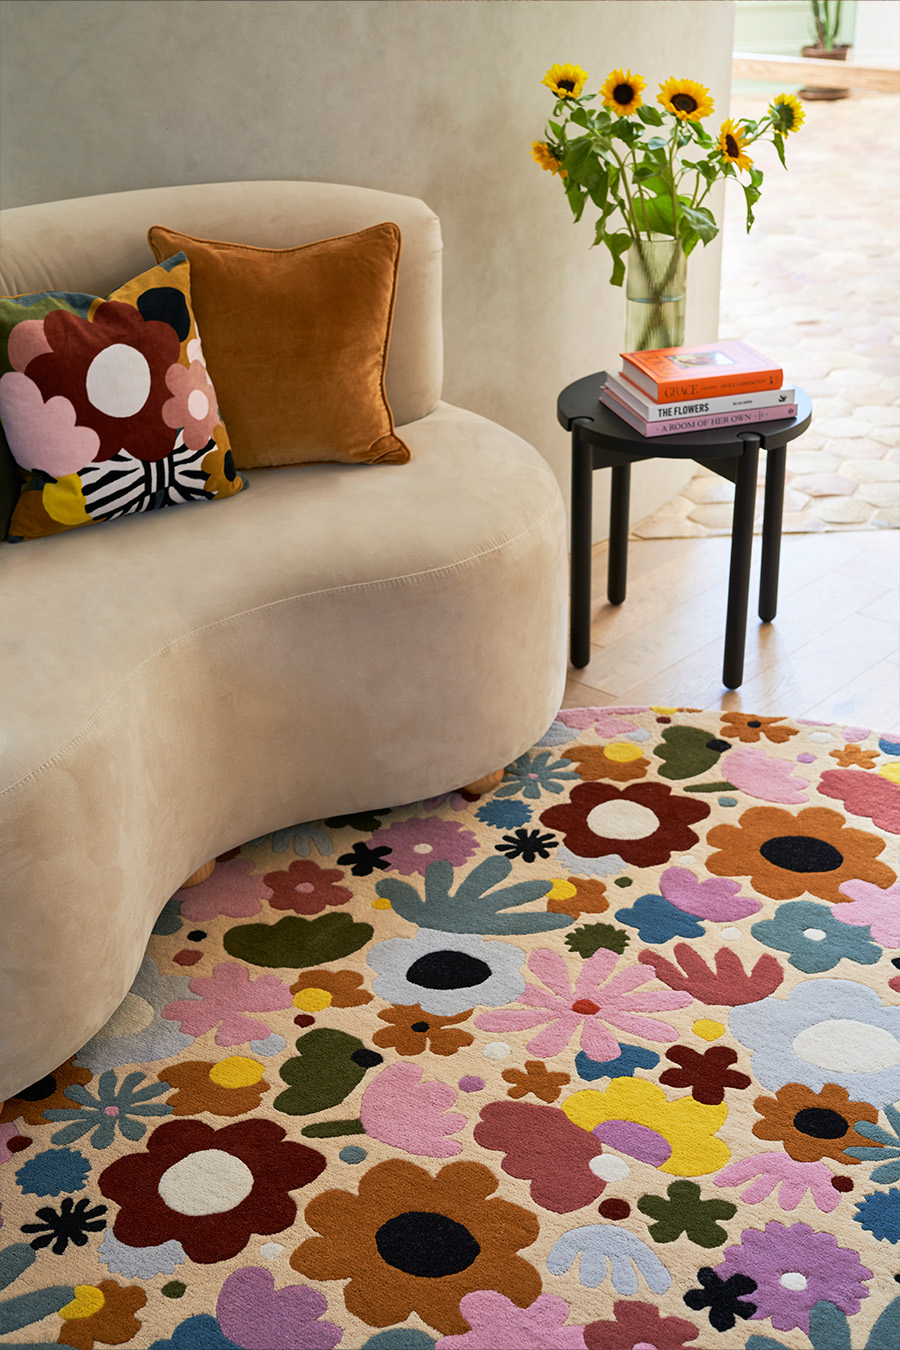 designer rugs castle skippy garden Buttercup lo lr1